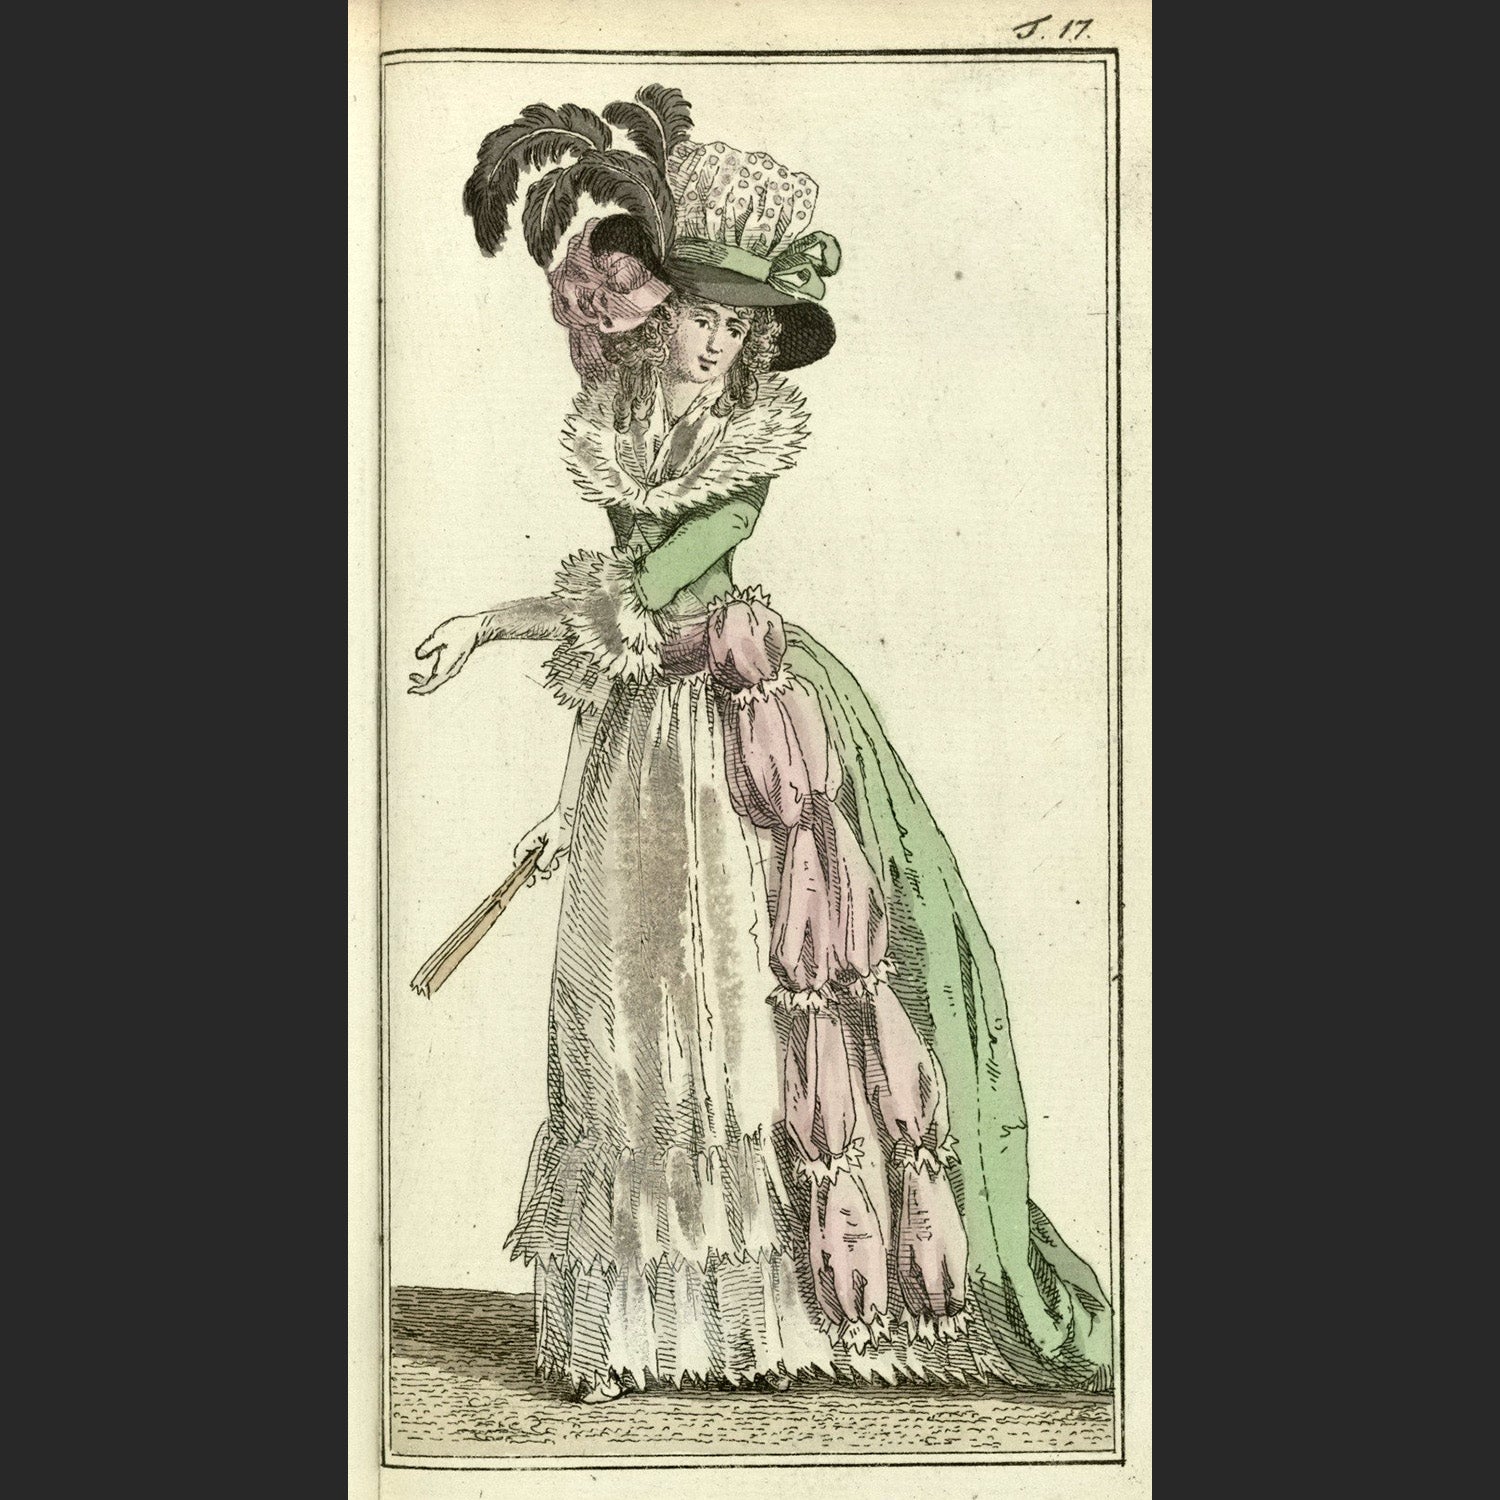 Stitching La Mode:  Patterns and Dressmaking From Fashion Plates of 1785-1795 - Burnley & Trowbridge Co.